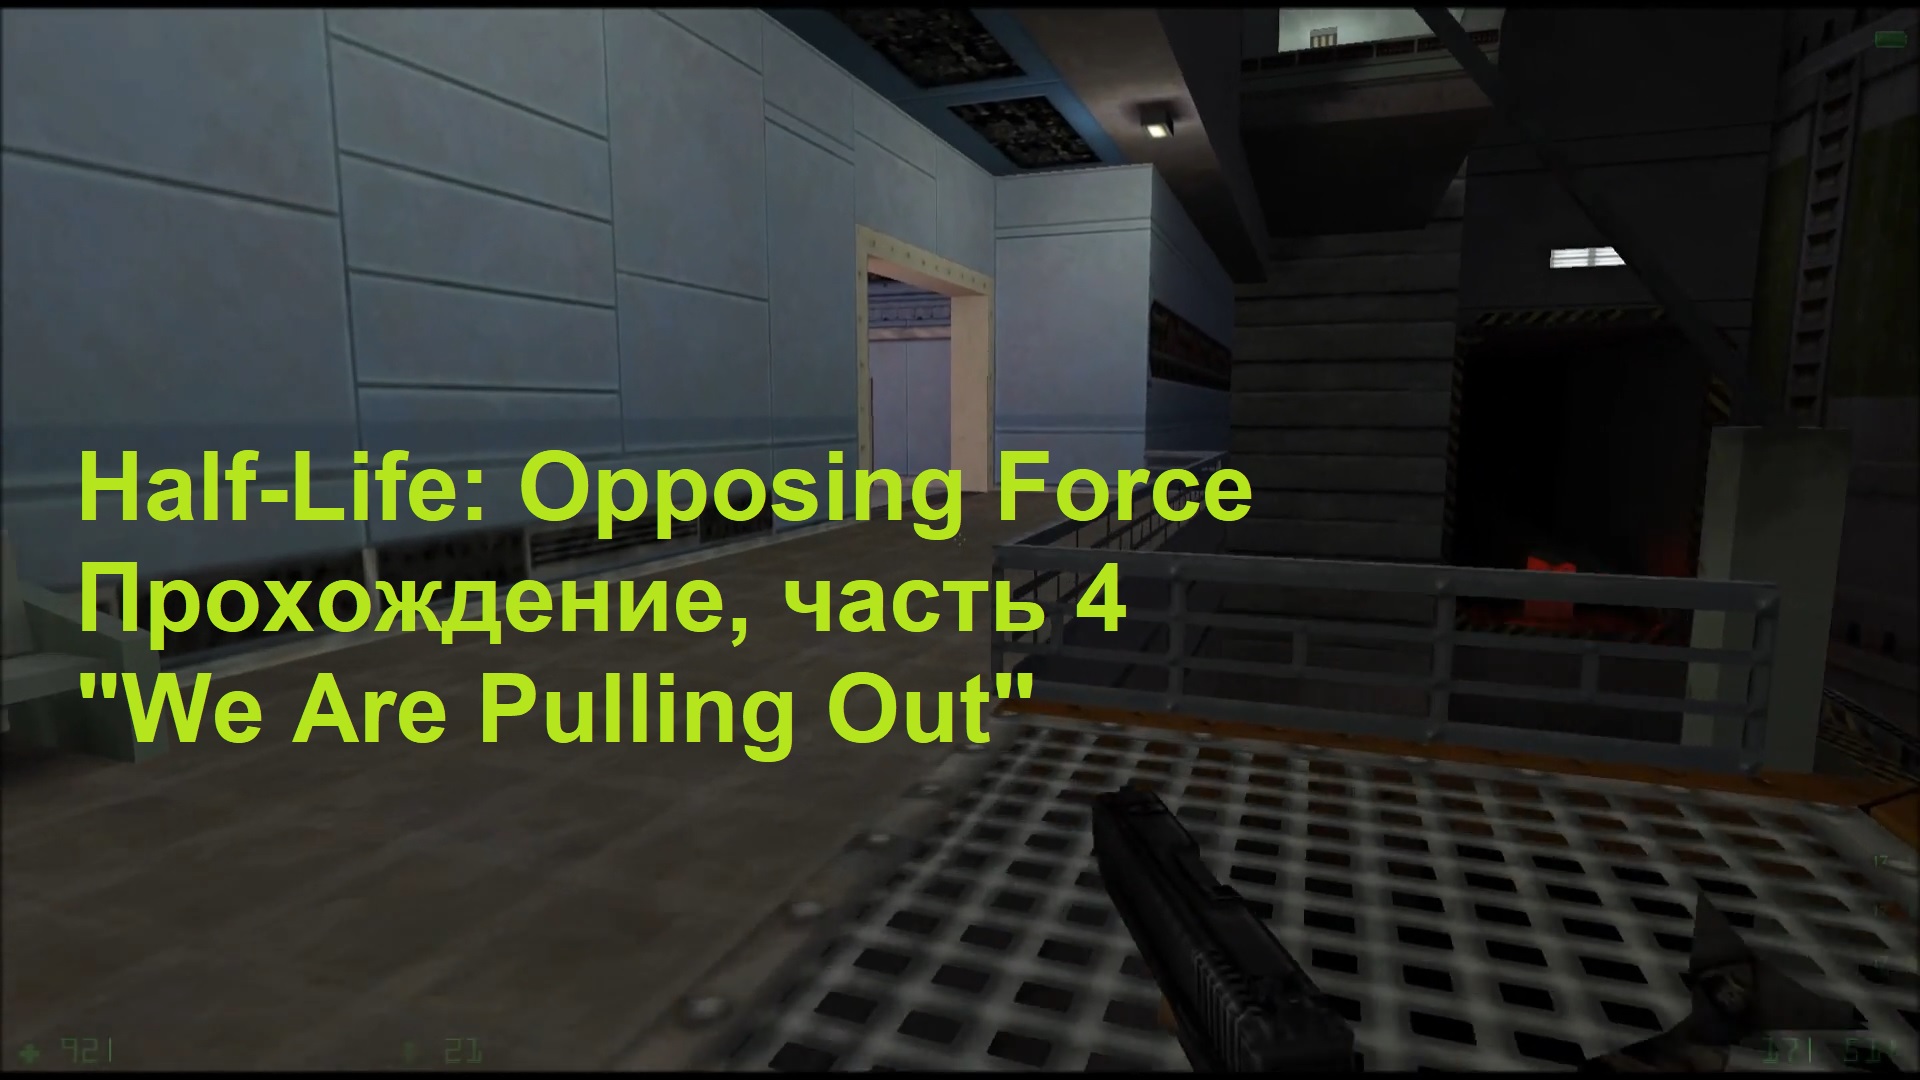 Half-Life: Opposing Force, Прохождение, часть 4 - "We Are Pulling Out"